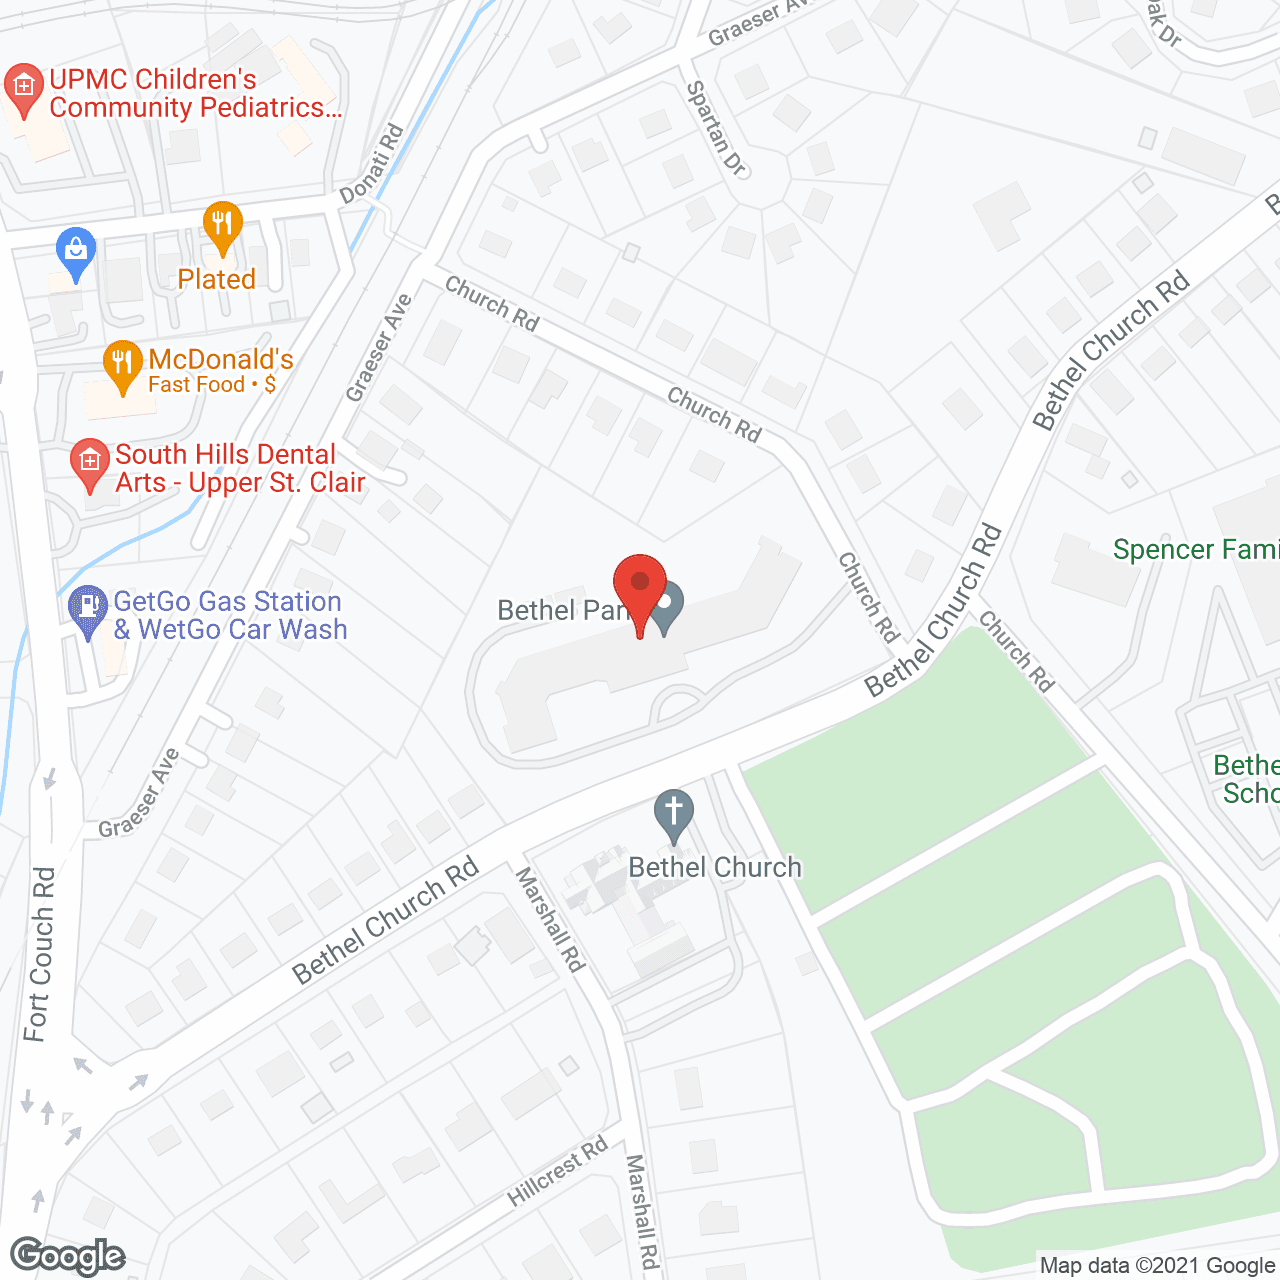 Bethel Park in google map